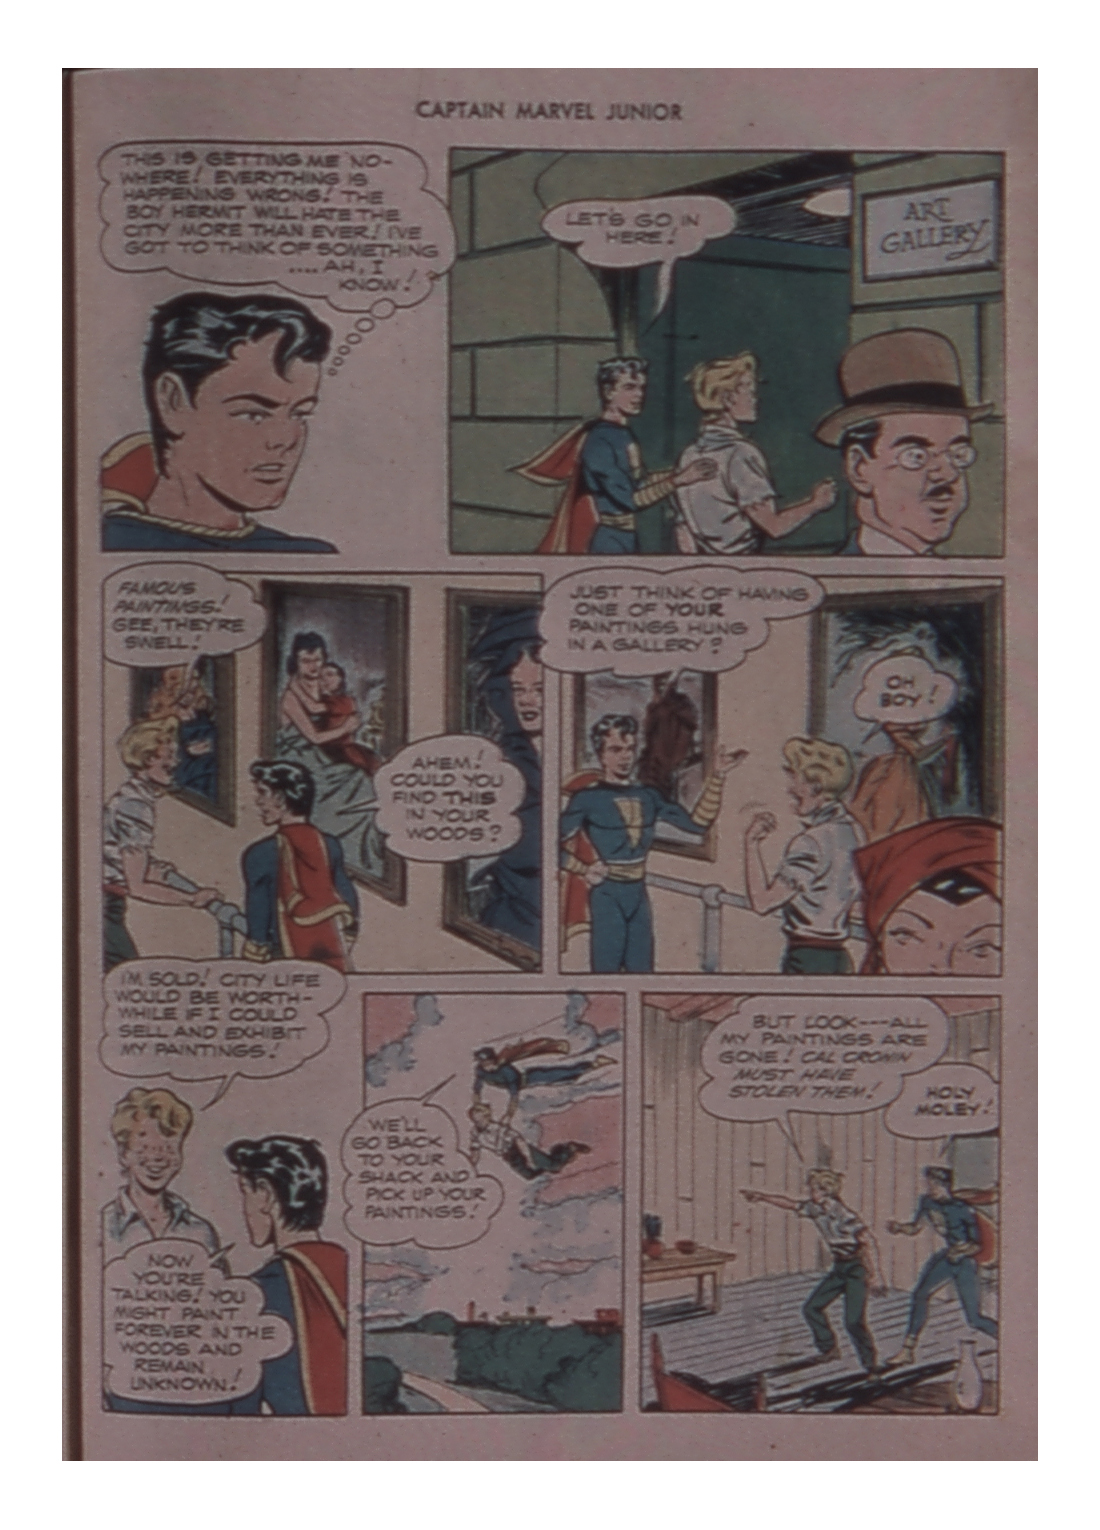 Read online Captain Marvel, Jr. comic -  Issue #59 - 47